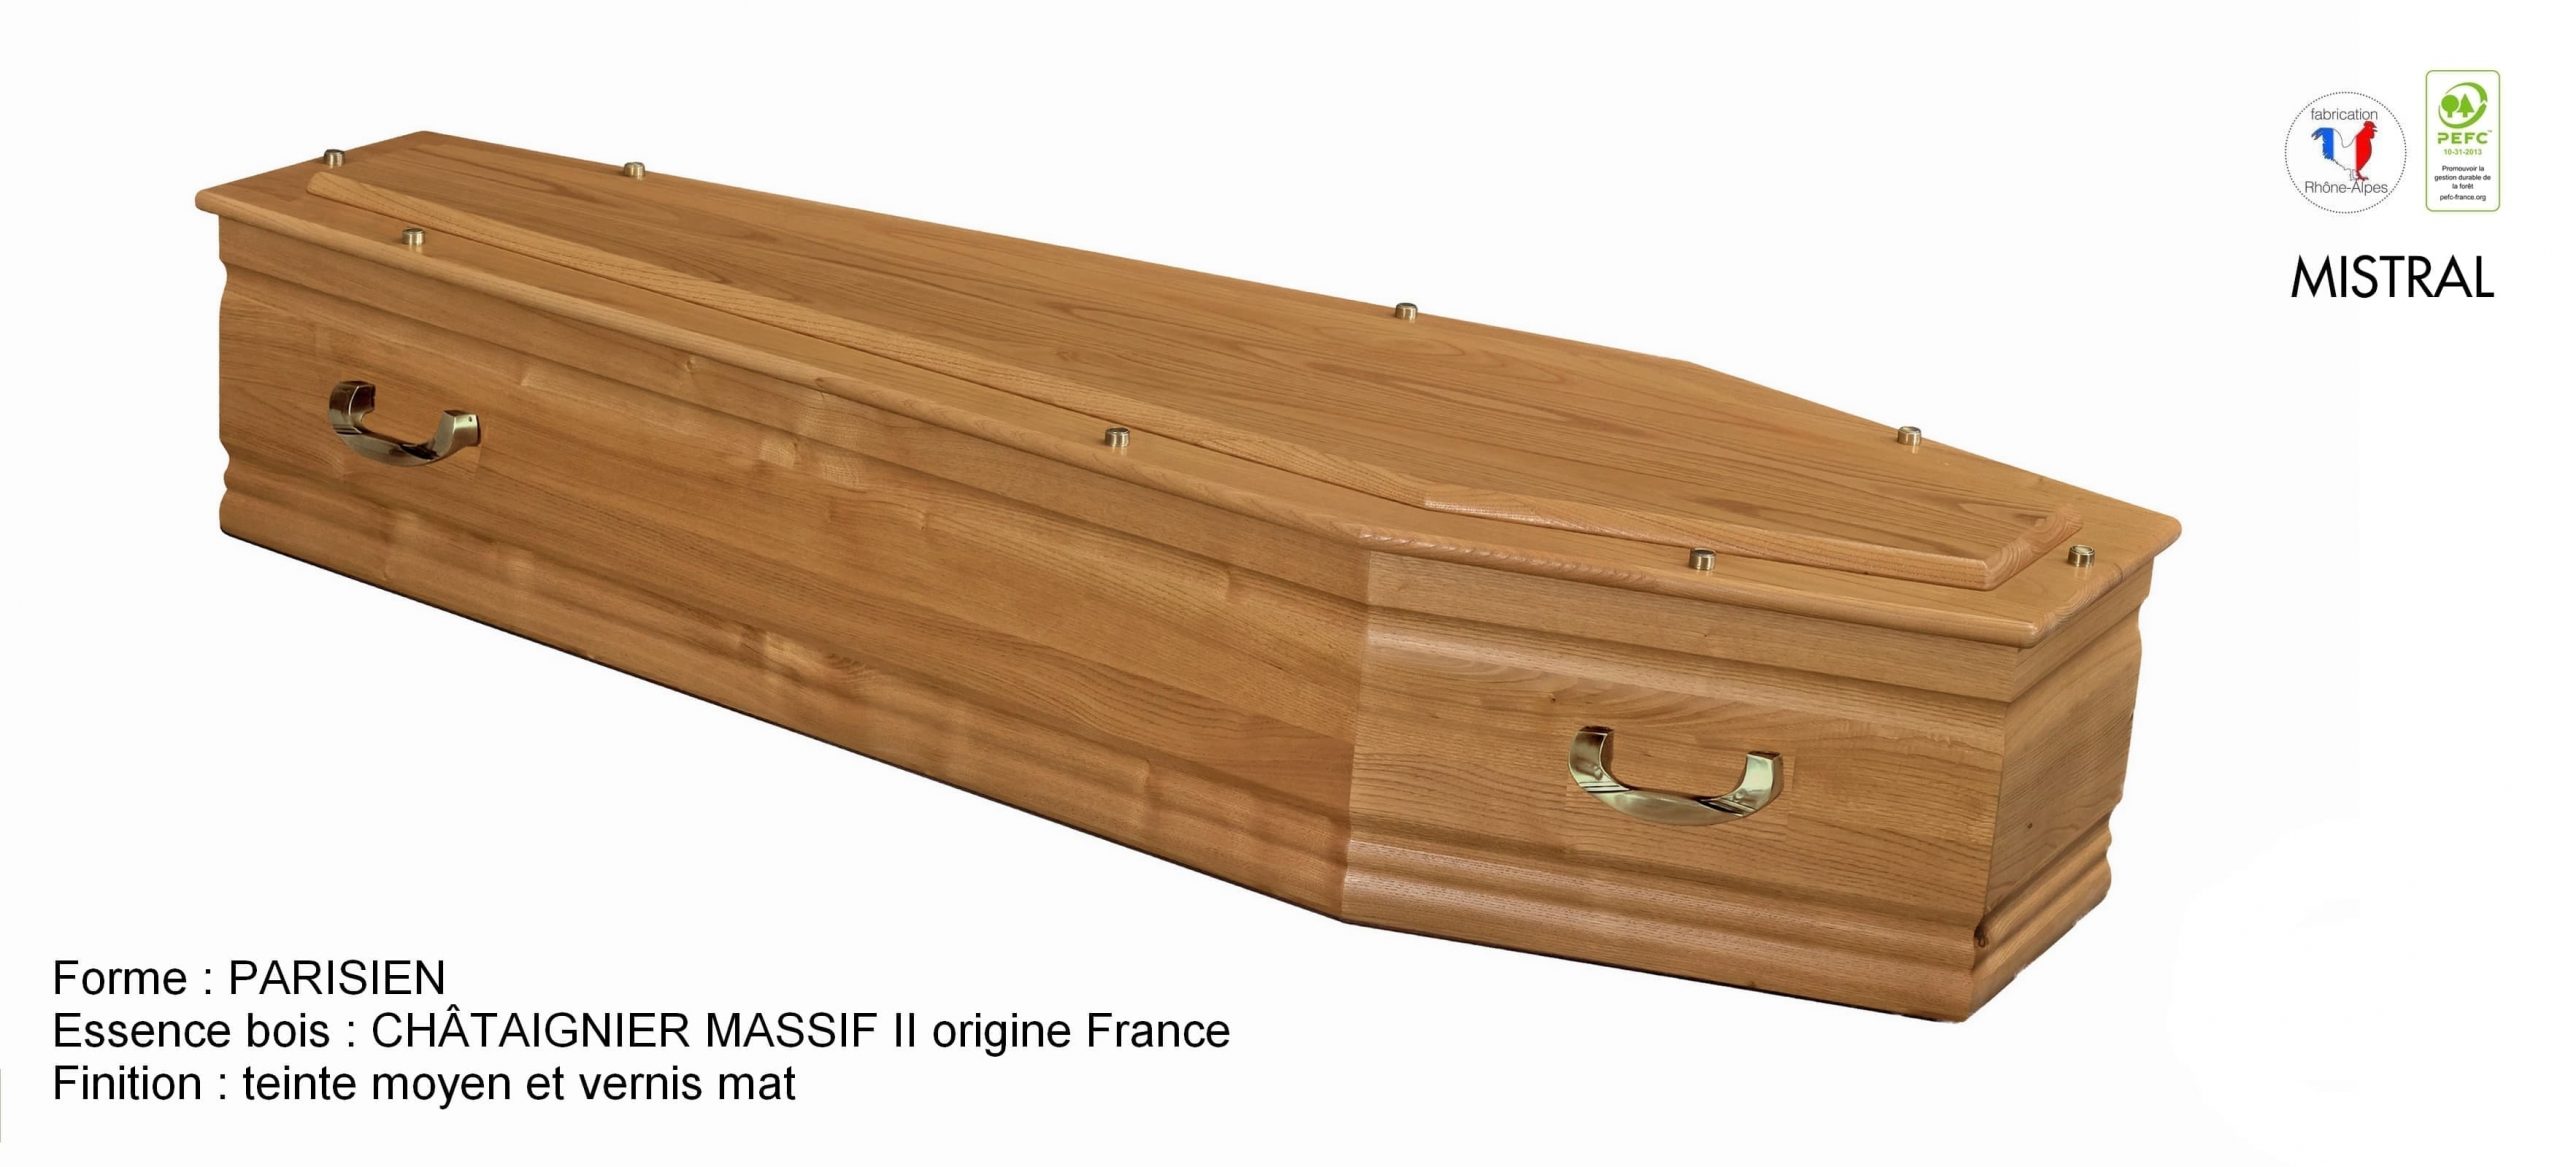 Cercueil MISTRAL, 1240€